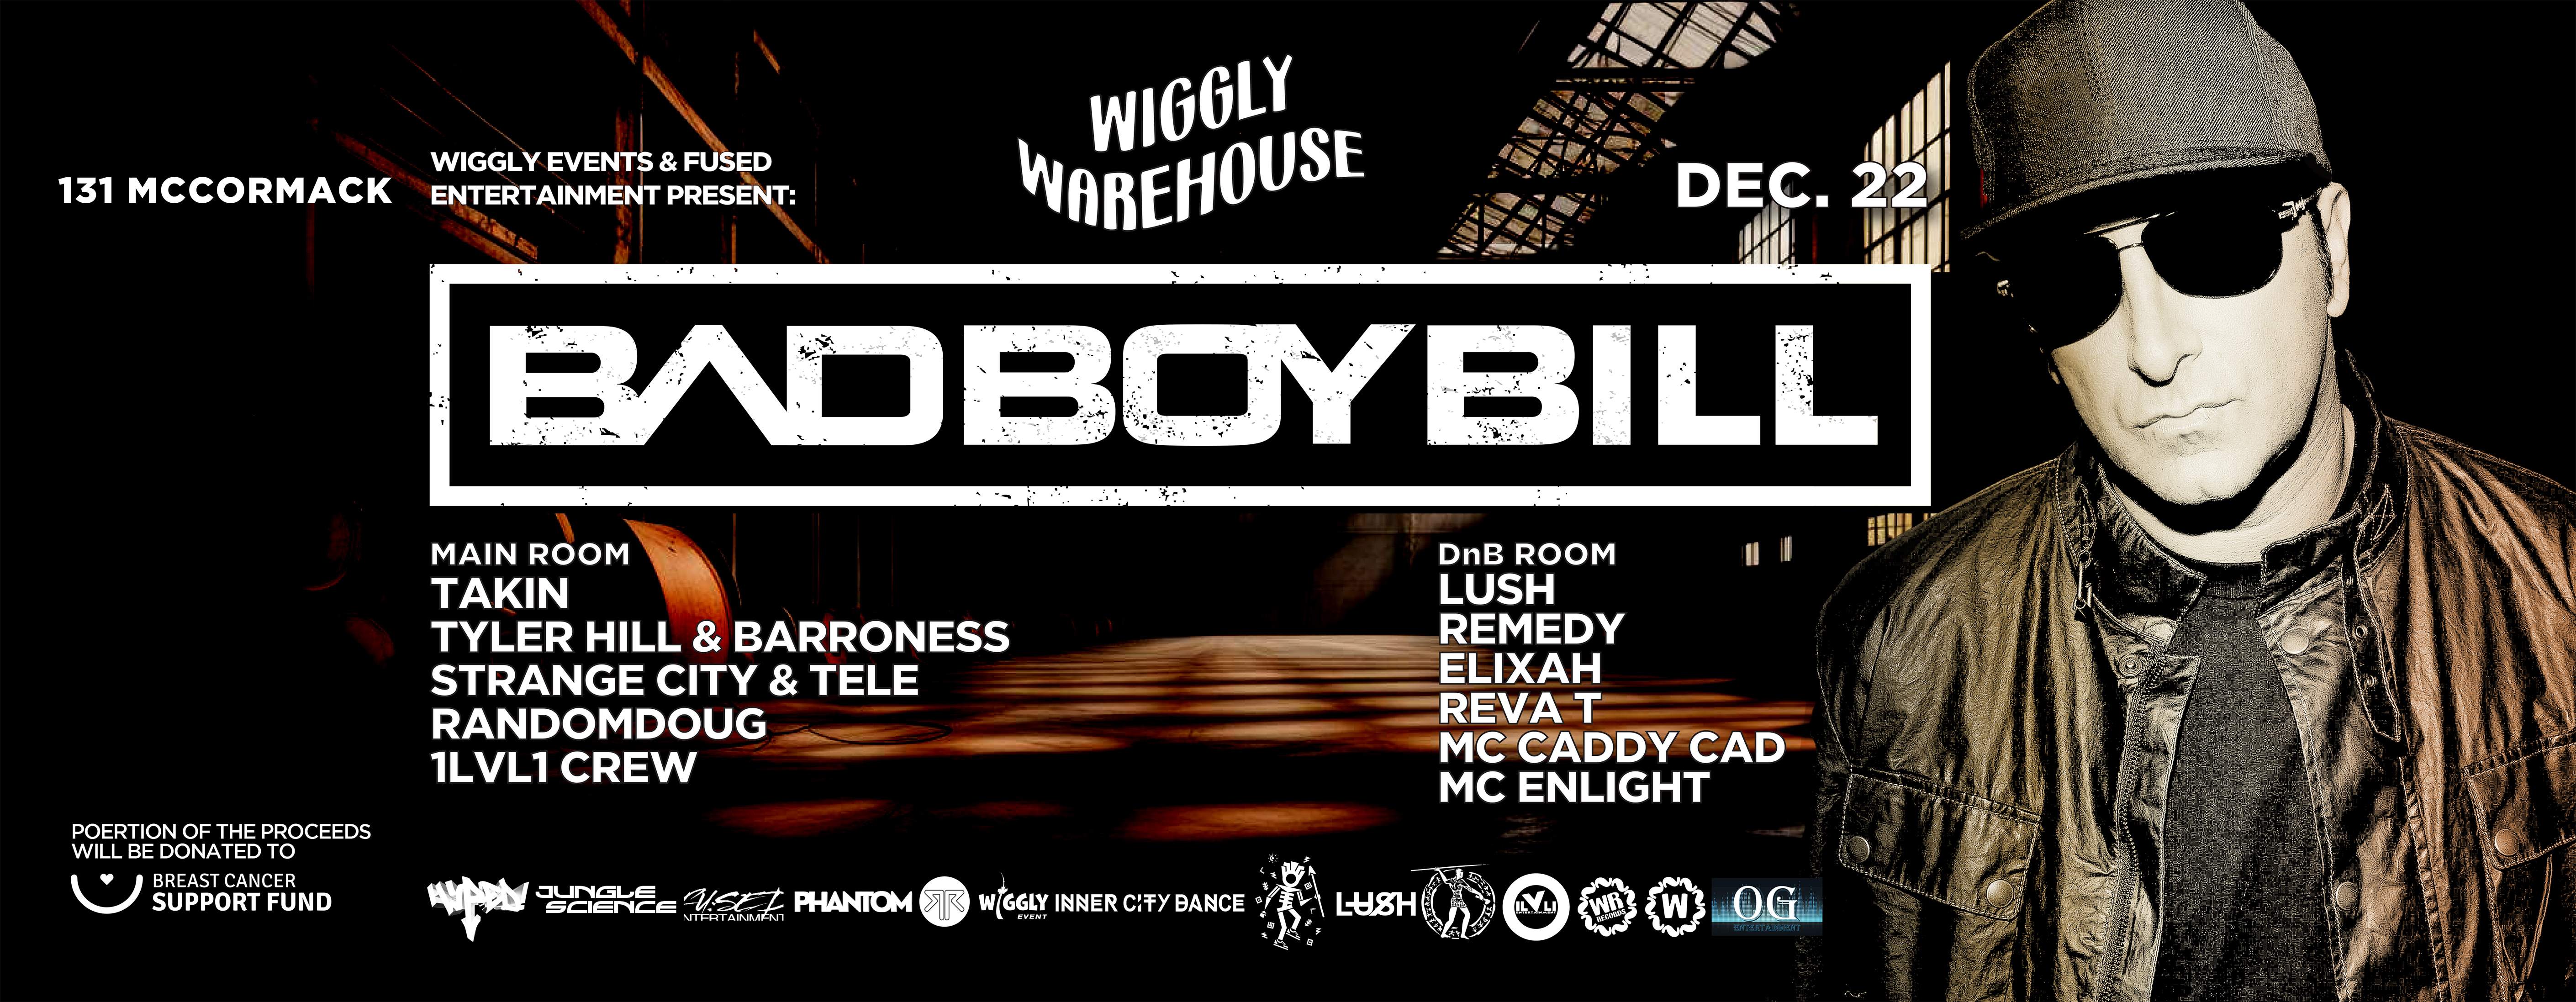 Wiggly Warehouse: Bad Boy Bill + DnB Room - Página frontal